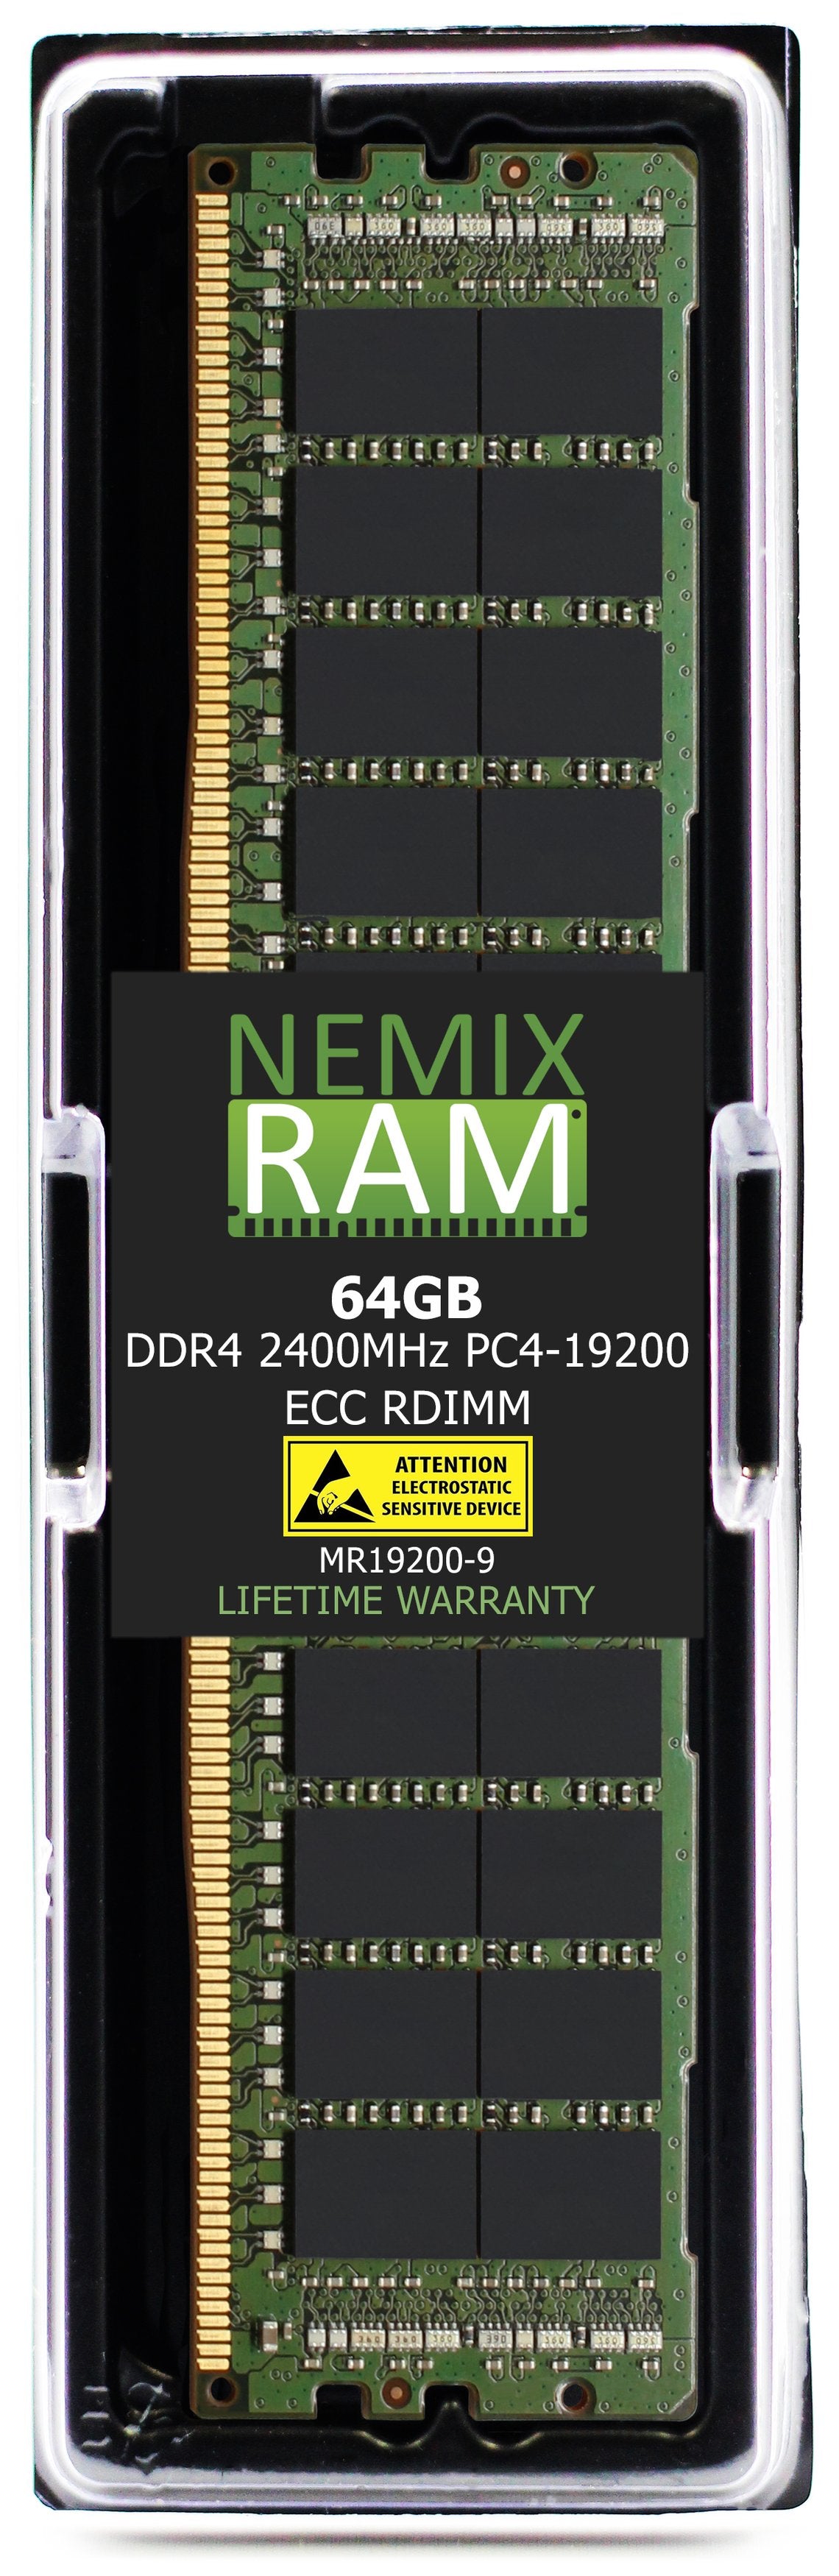 64GB DDR4 2400MHZ PC4-19200 RDIMM Compatible with Supermicro MEM-DR464L-SL01-ER24